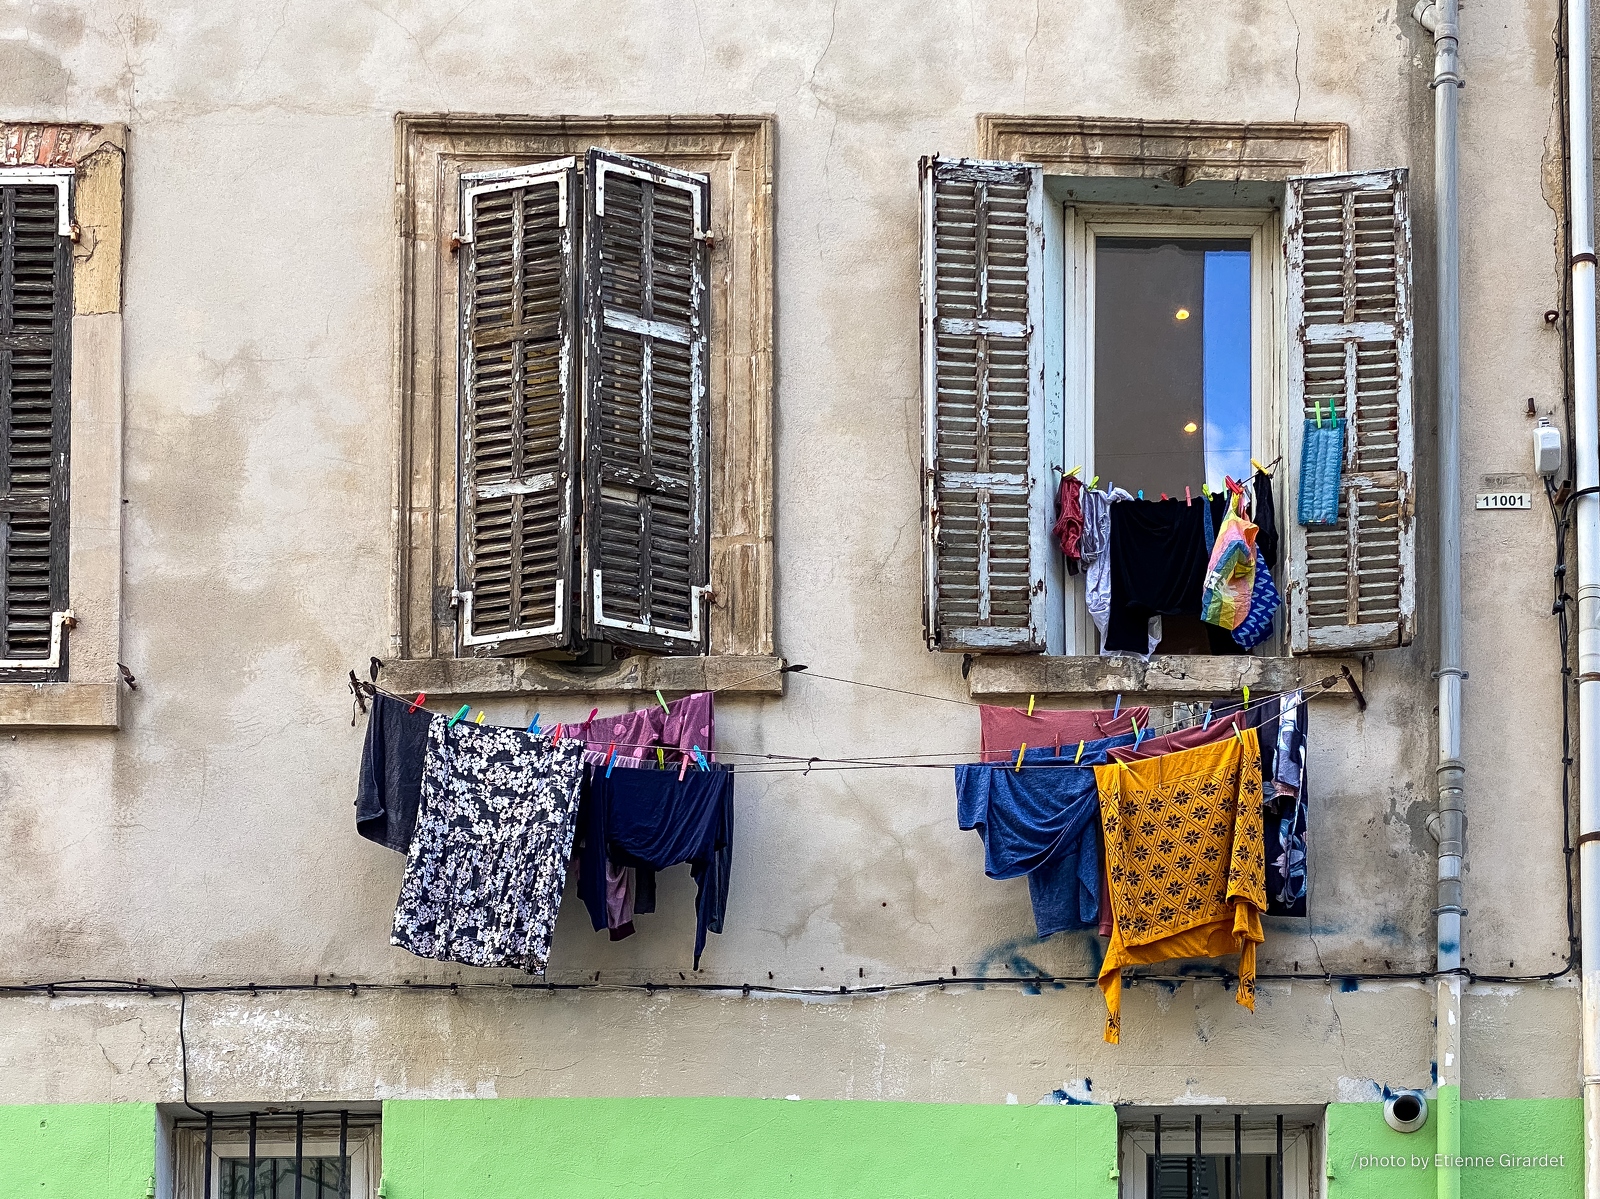 202204_23_IMG_1298-clothesline-window-laundry-house-by-E-Girardet.jpg